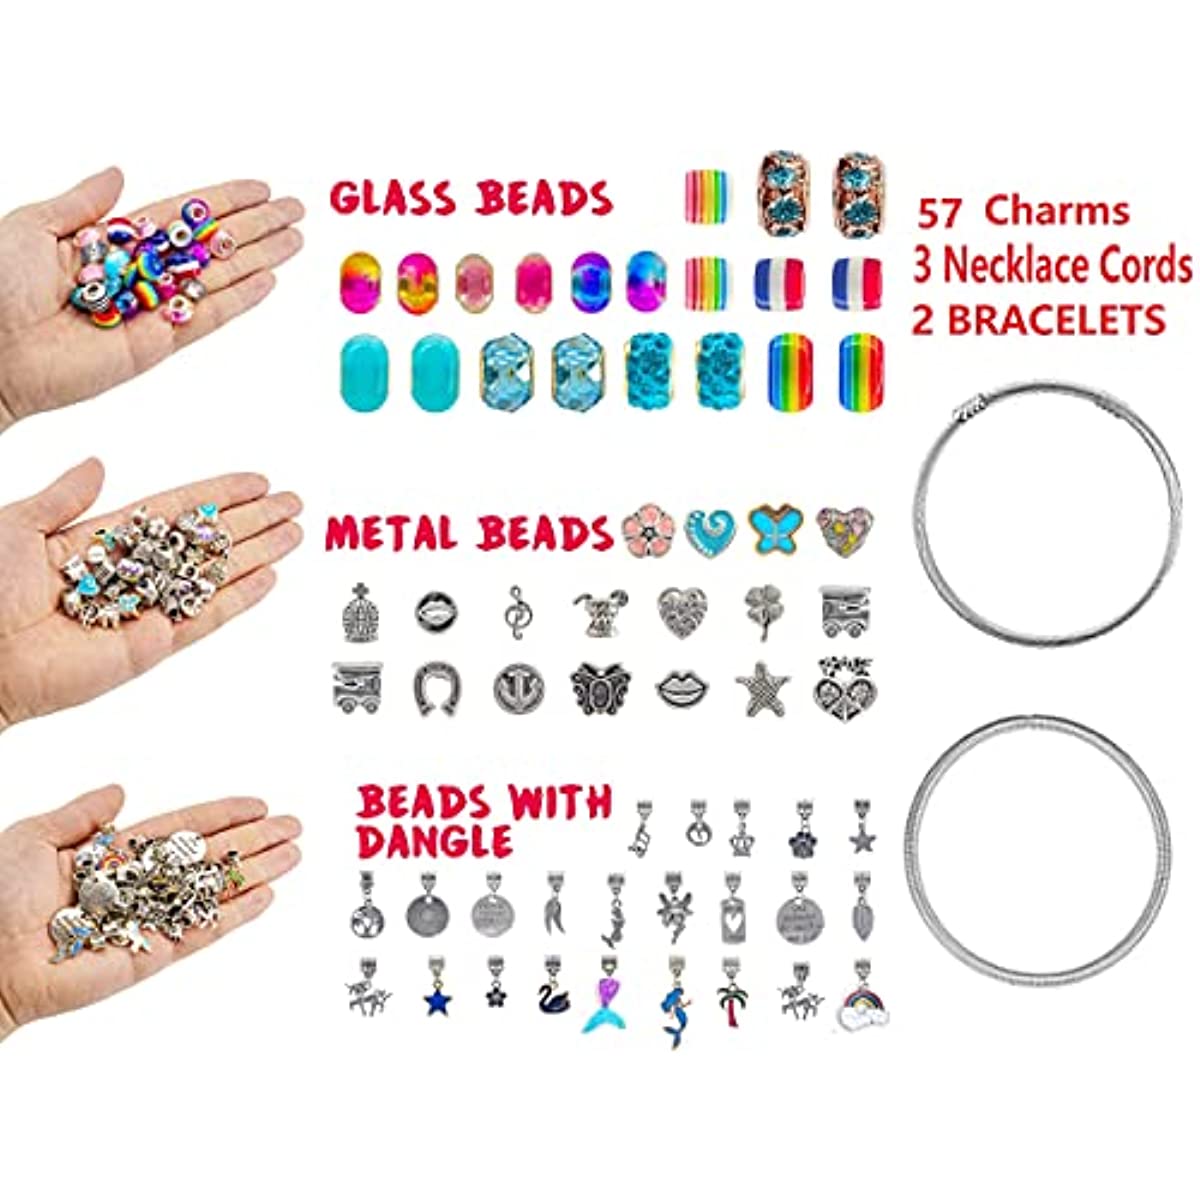 klmars Charm Bracelet Making Kit,Jewelry Making Supplies Beads,Unicorn/Mermaid Crafts Gifts Set for Girls Teens Age 8-12